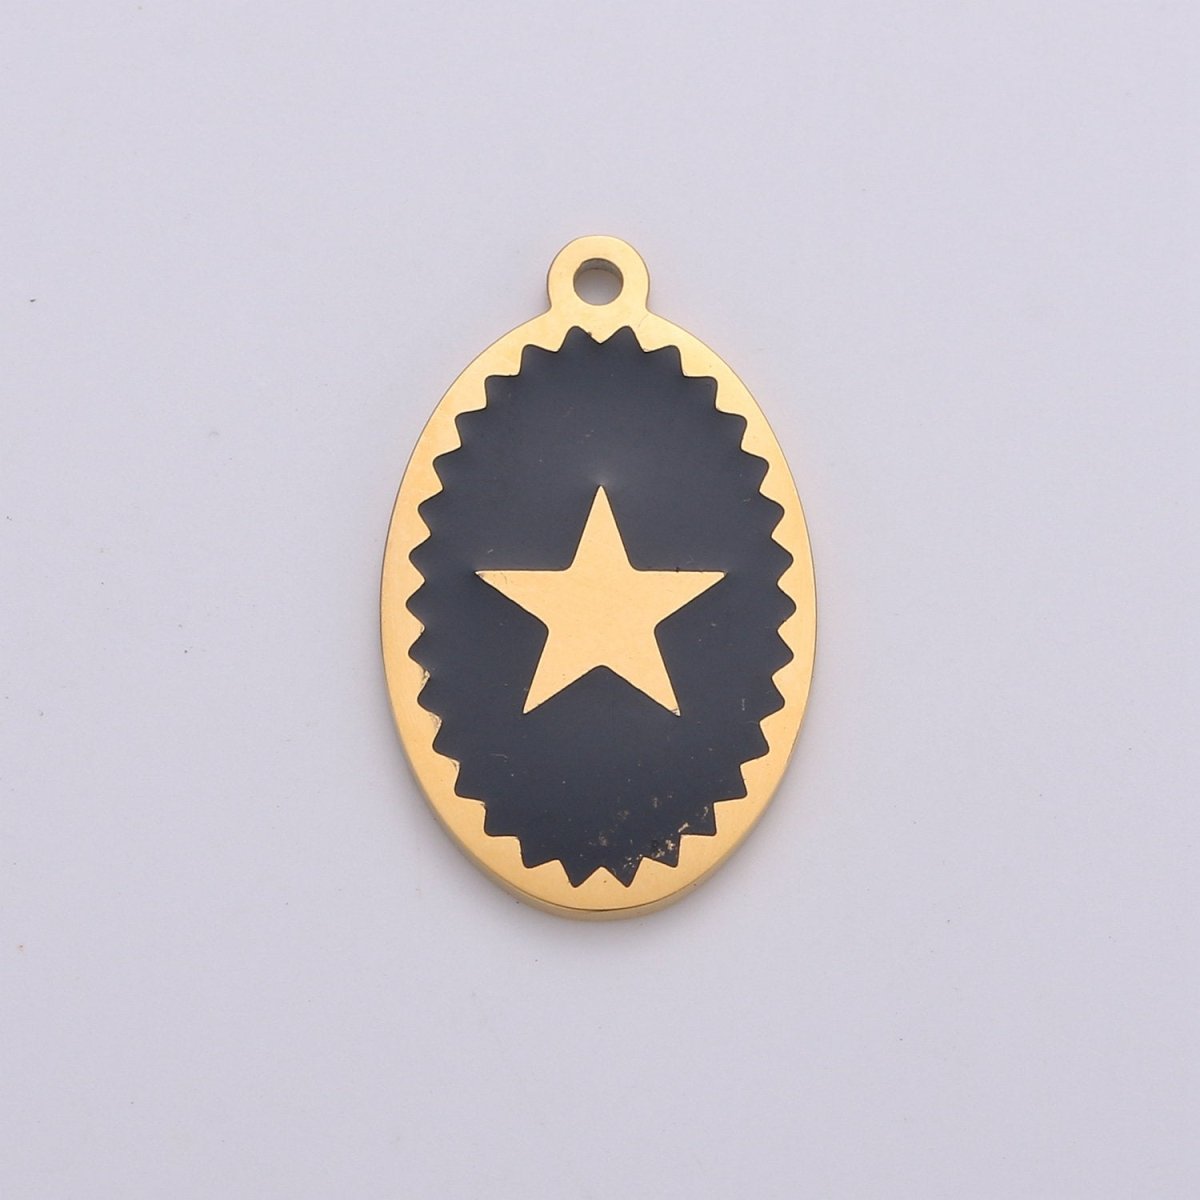 Enamel Star Charm 24k Gold Filled Star Charm Pink Teal black White Enamel Star Celestial Jewelry Minimalist Necklace Bracelet Component E688-E-691 - DLUXCA